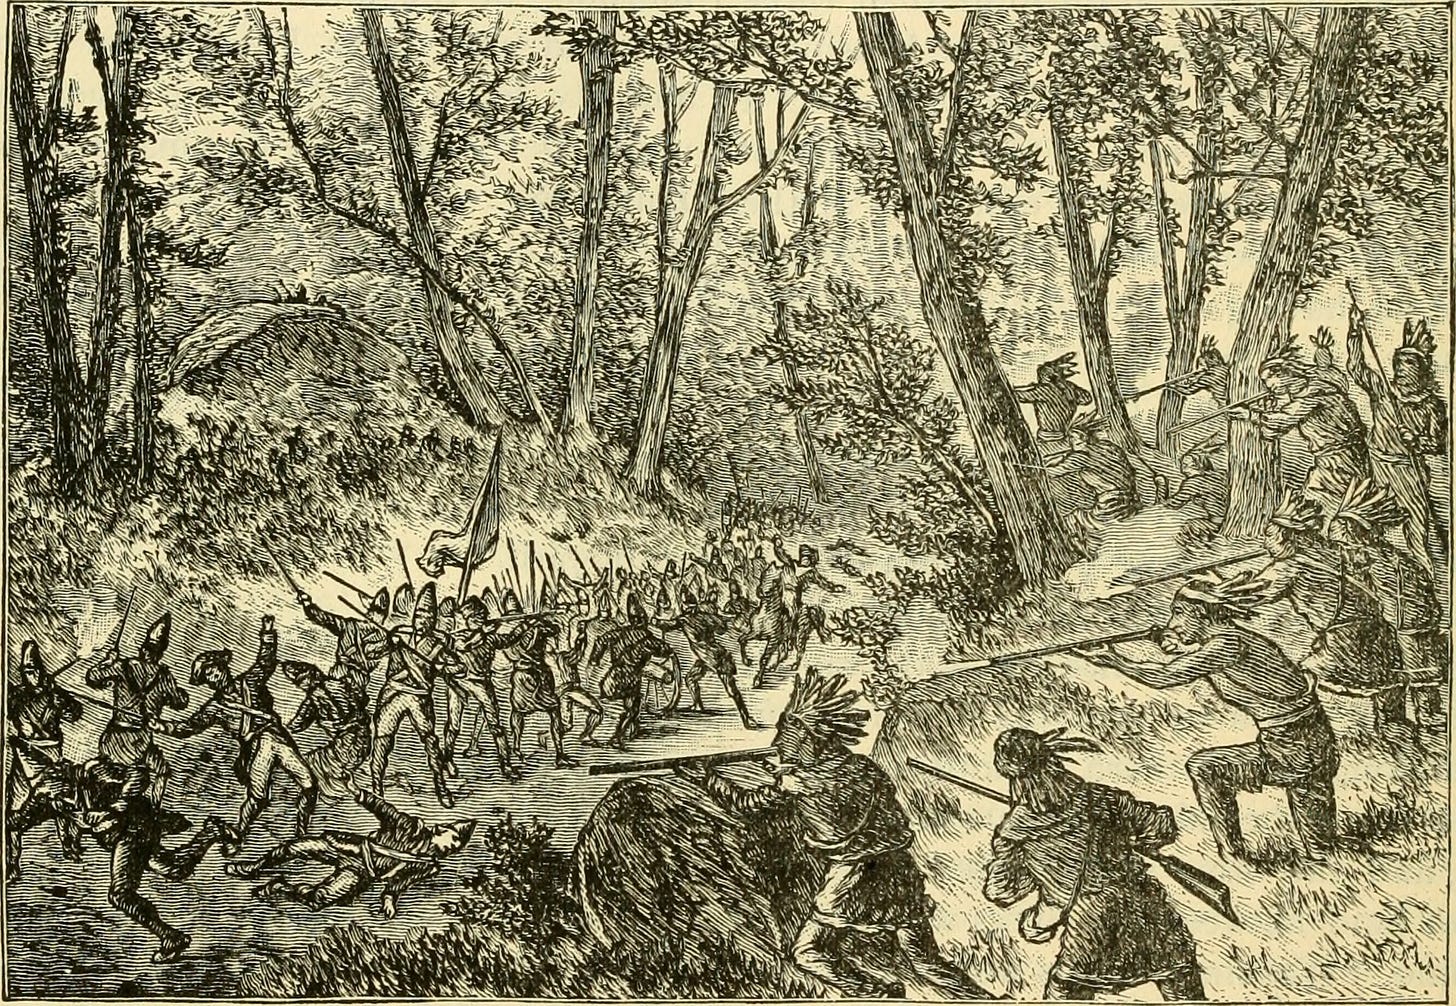 https://upload.wikimedia.org/wikipedia/commons/2/2a/Indians_ambush_British_at_Battle_of_the_Monongahela.jpg